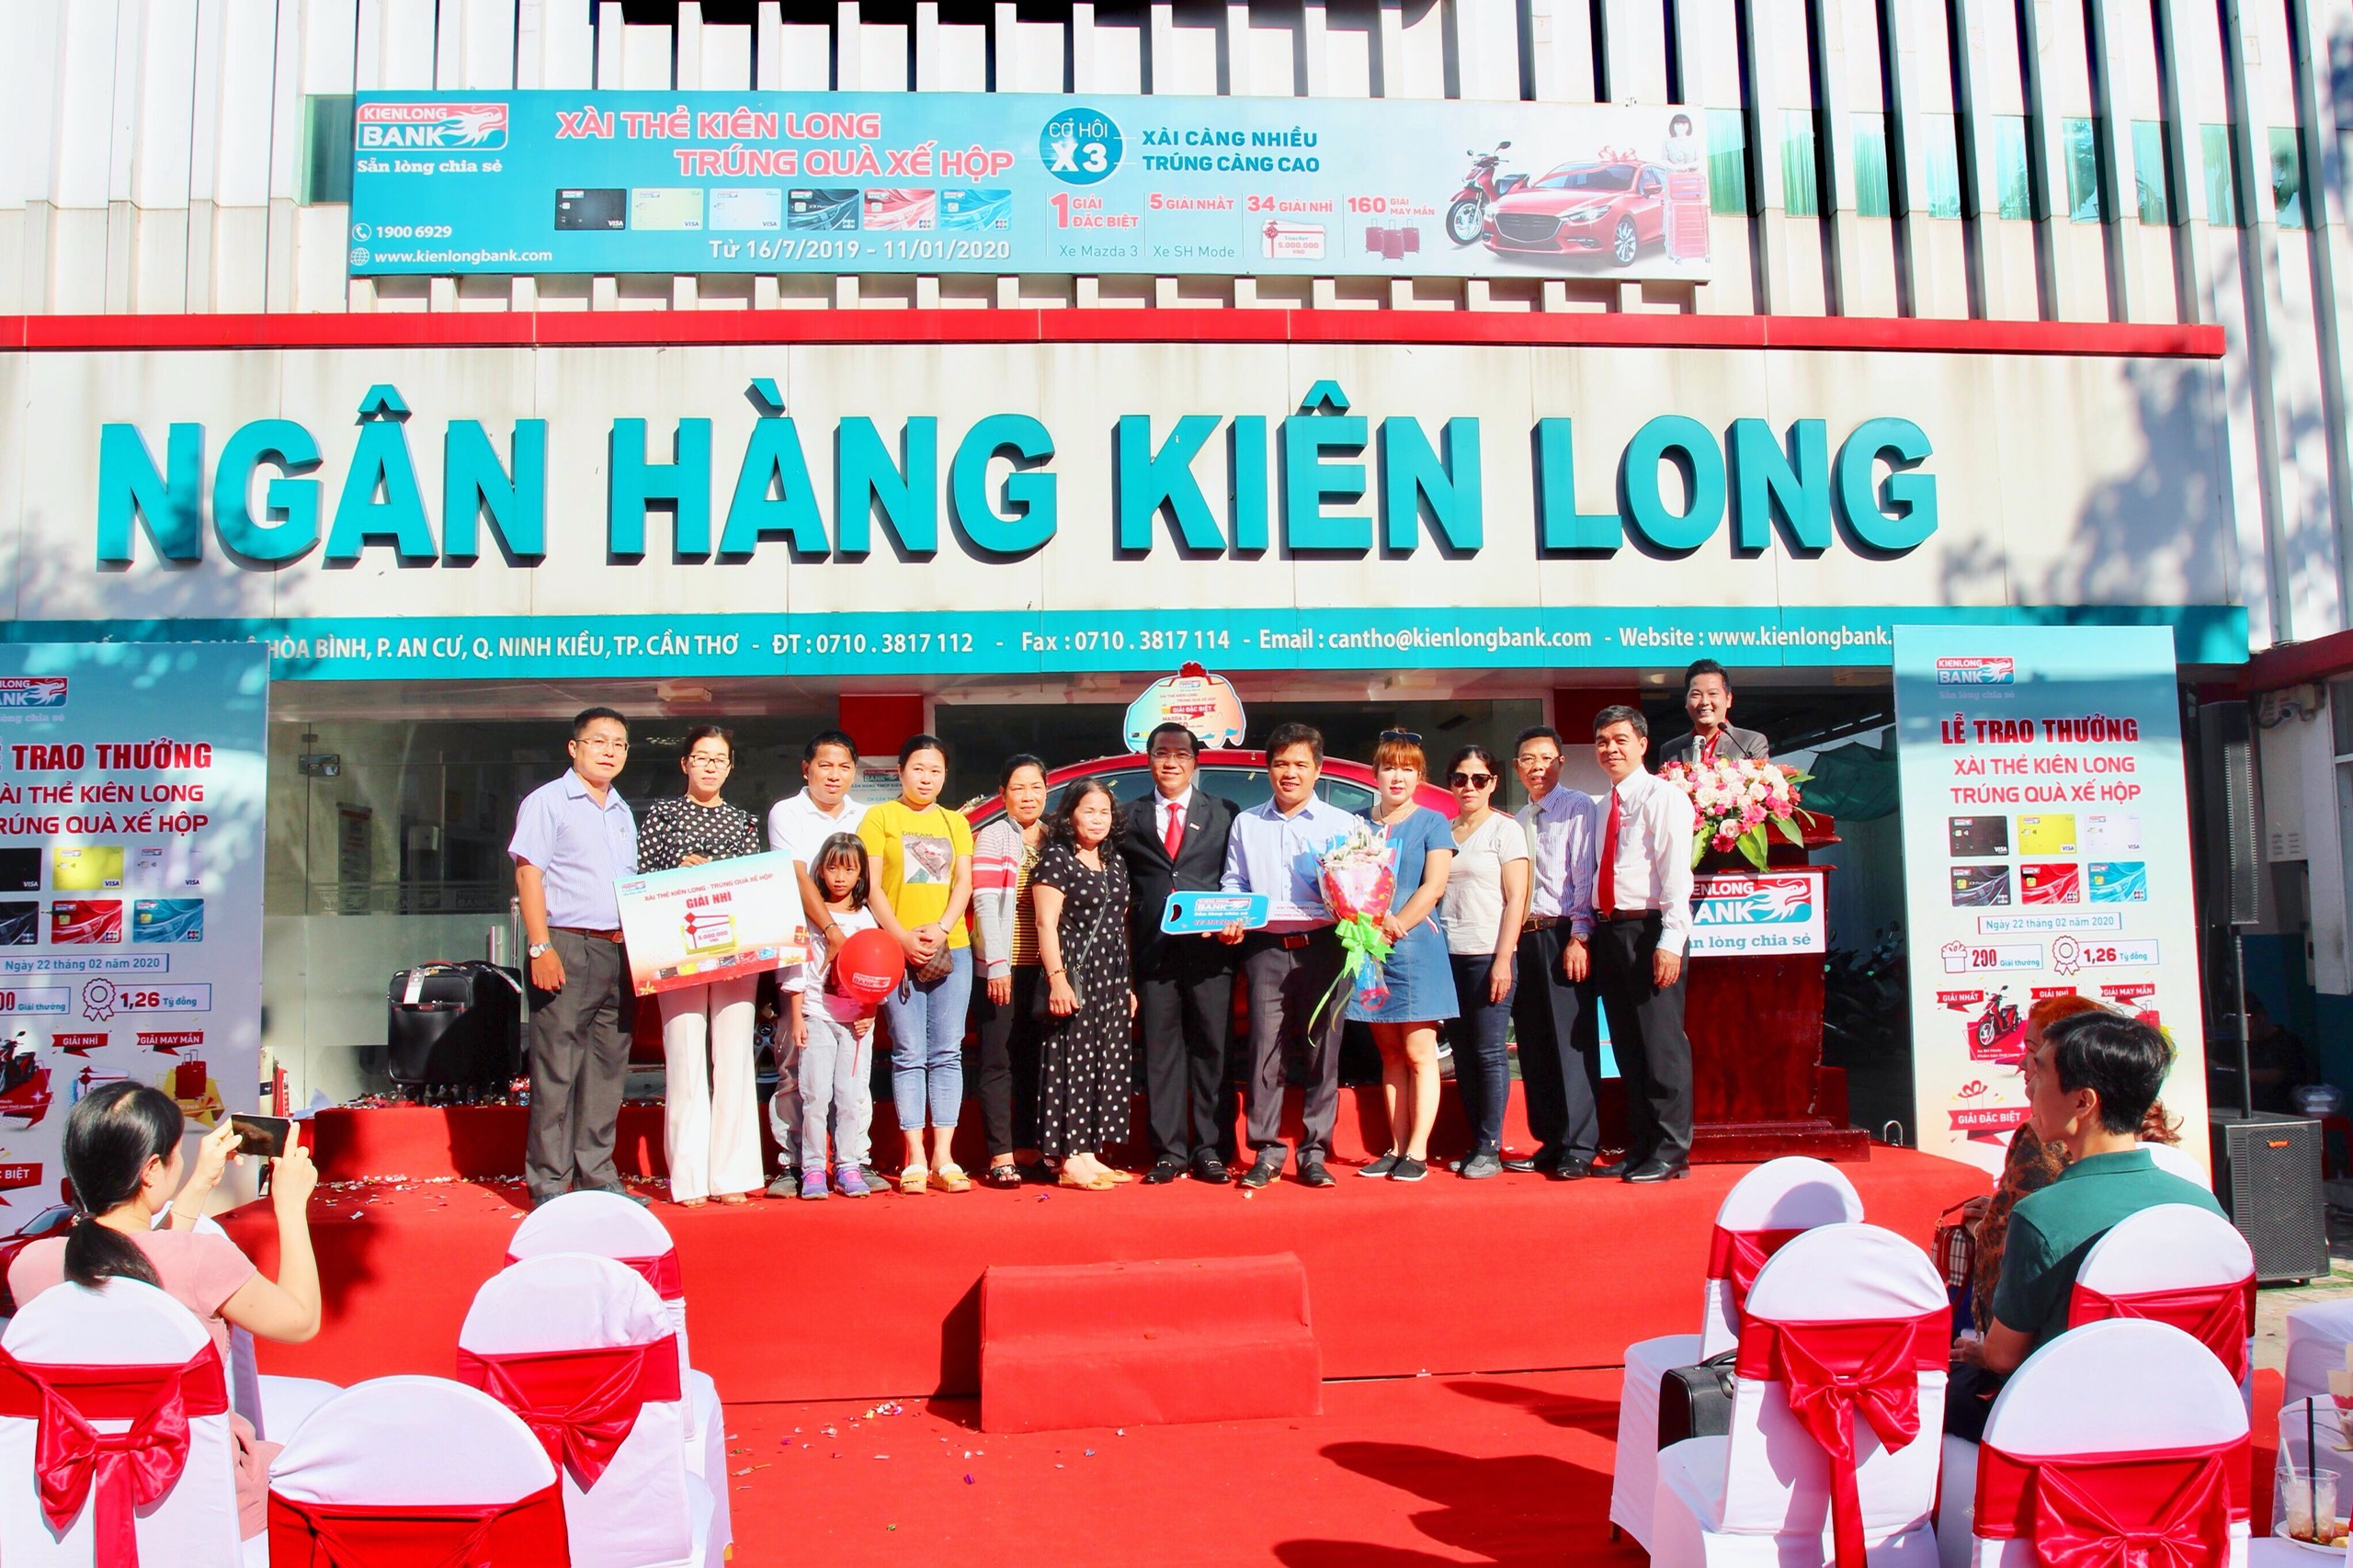 Kienlongbank awards more than vnd 126 billion for credit cardholder winners